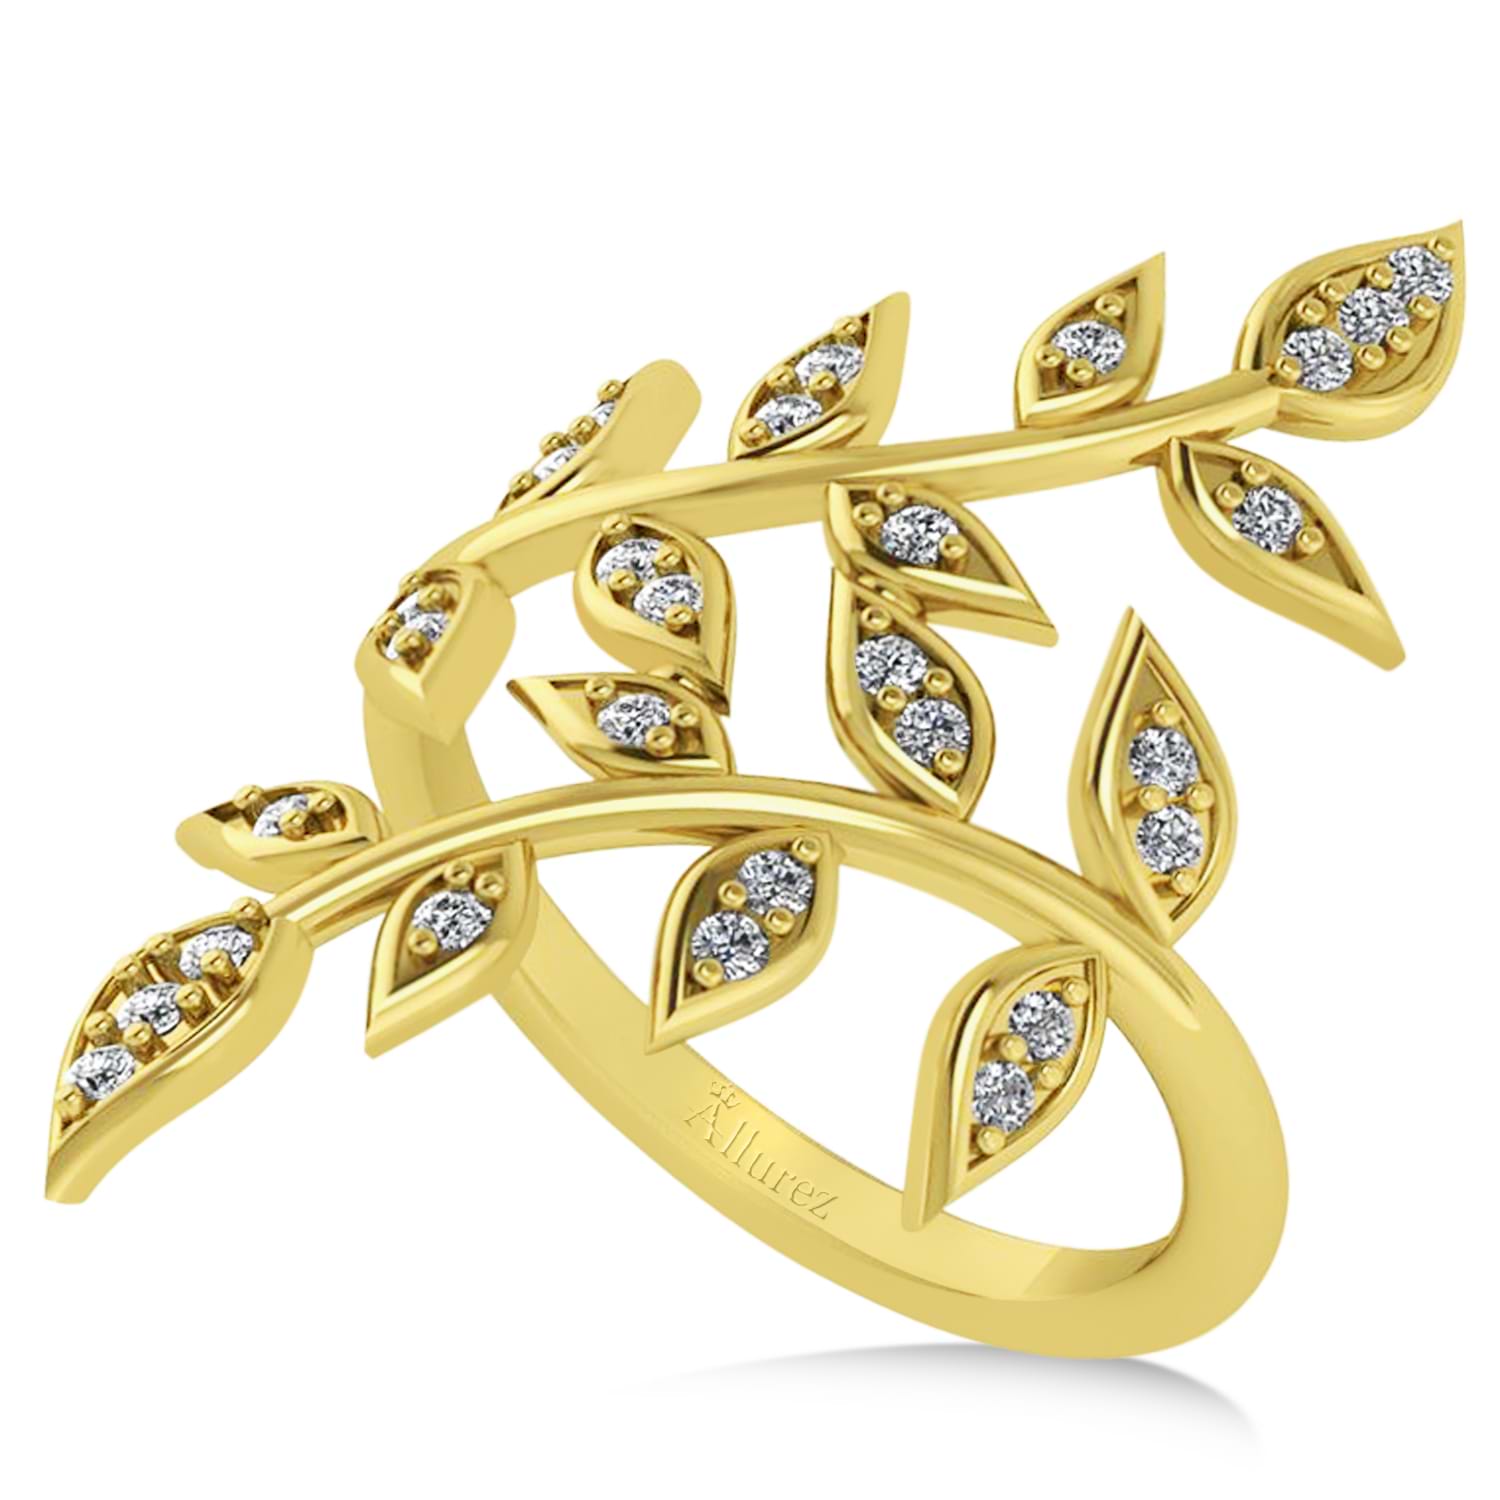 Diamond Olive Leaf Vine Fashion Ring 14k Yellow Gold (0.28ct)